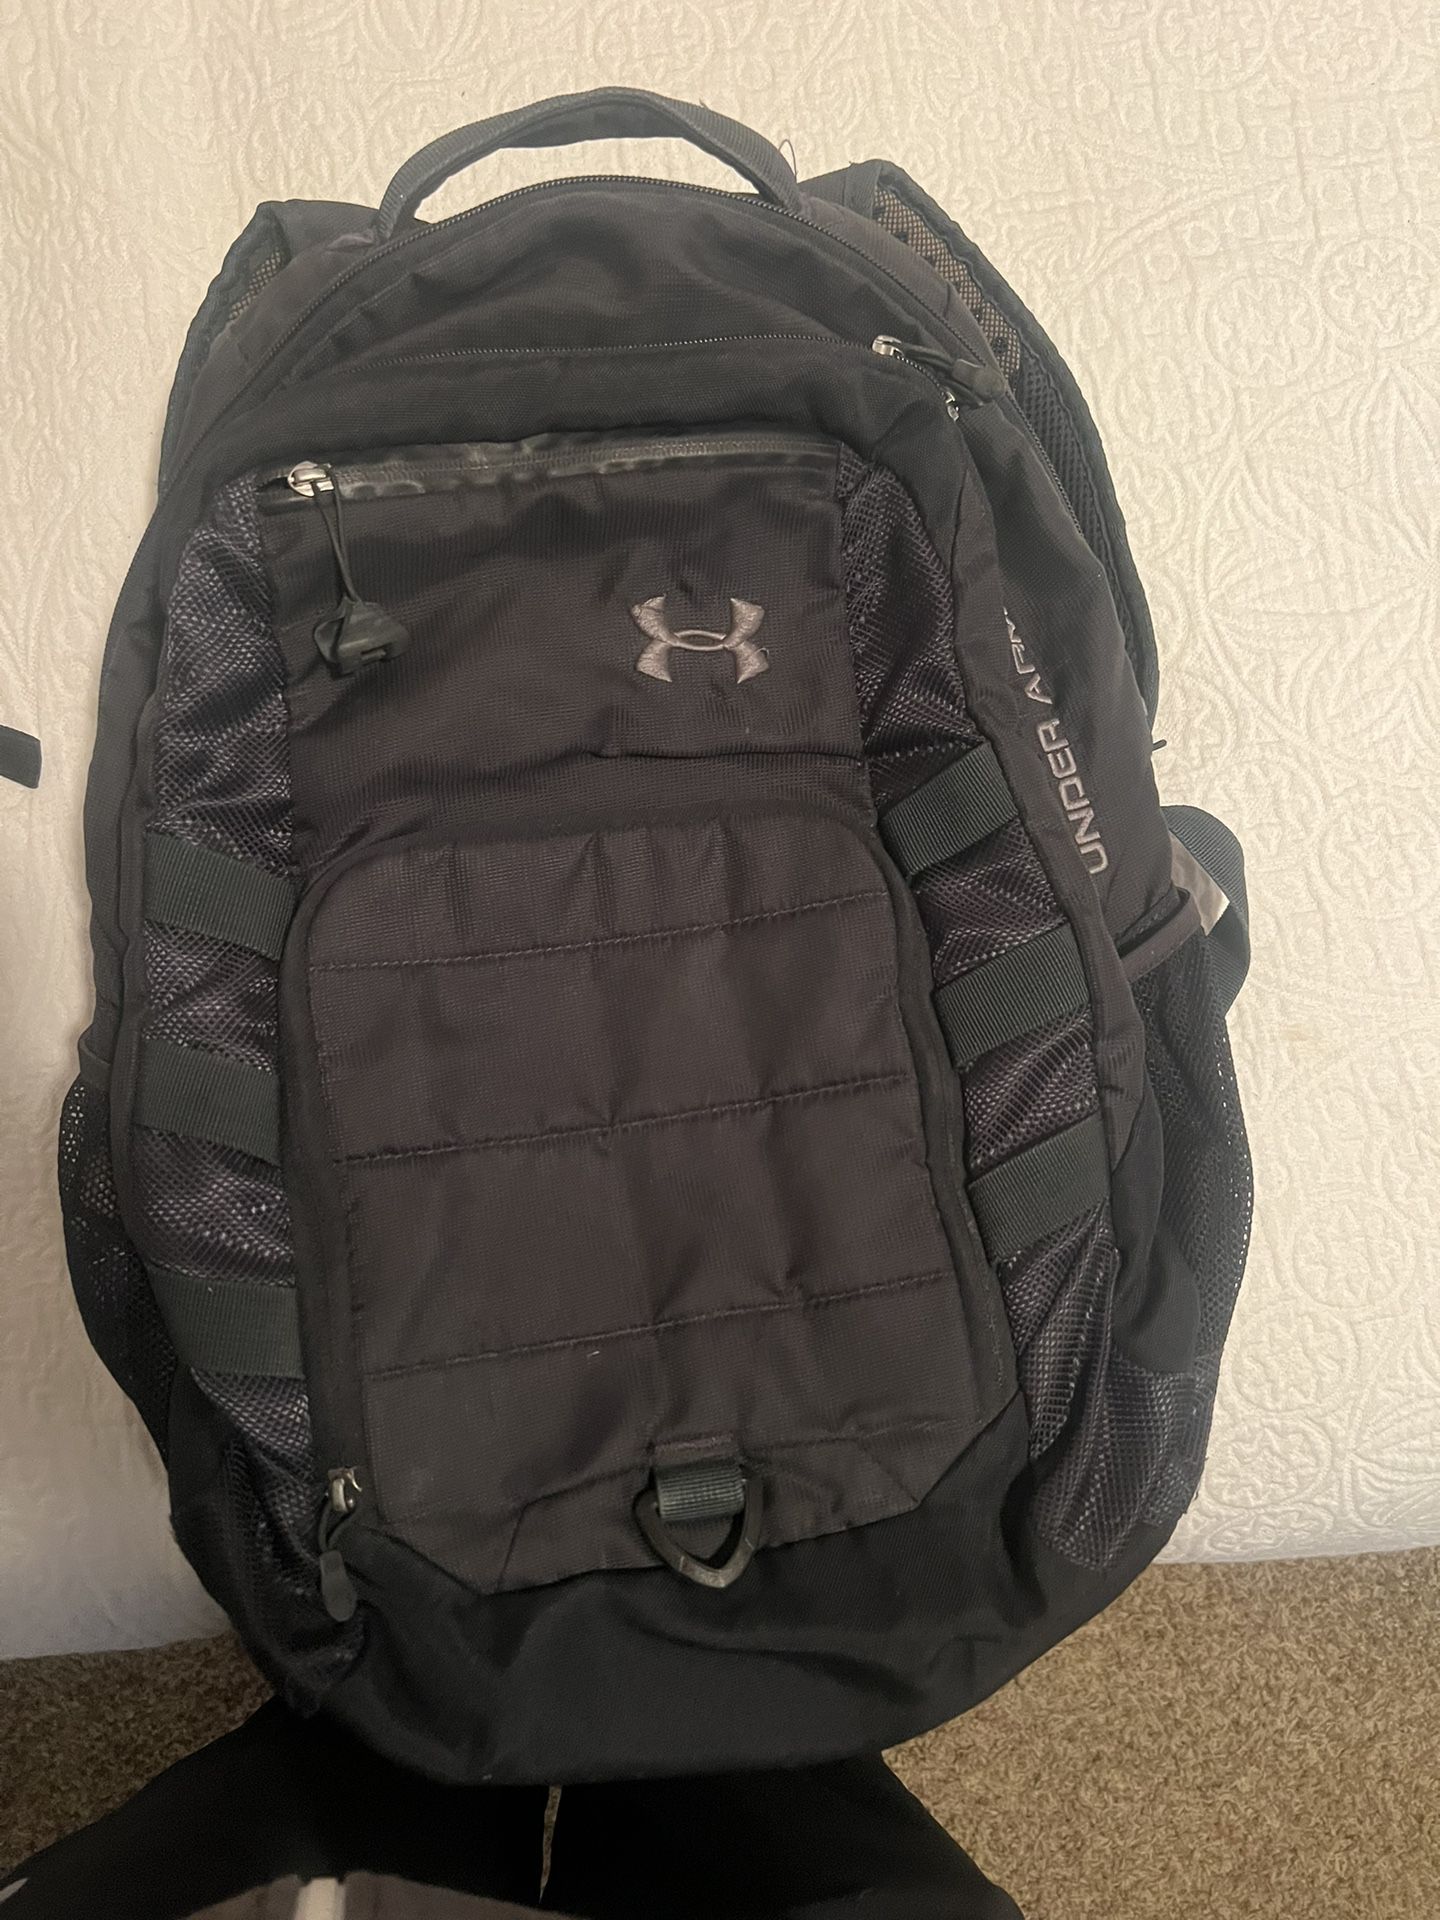 Underarmor Backpack